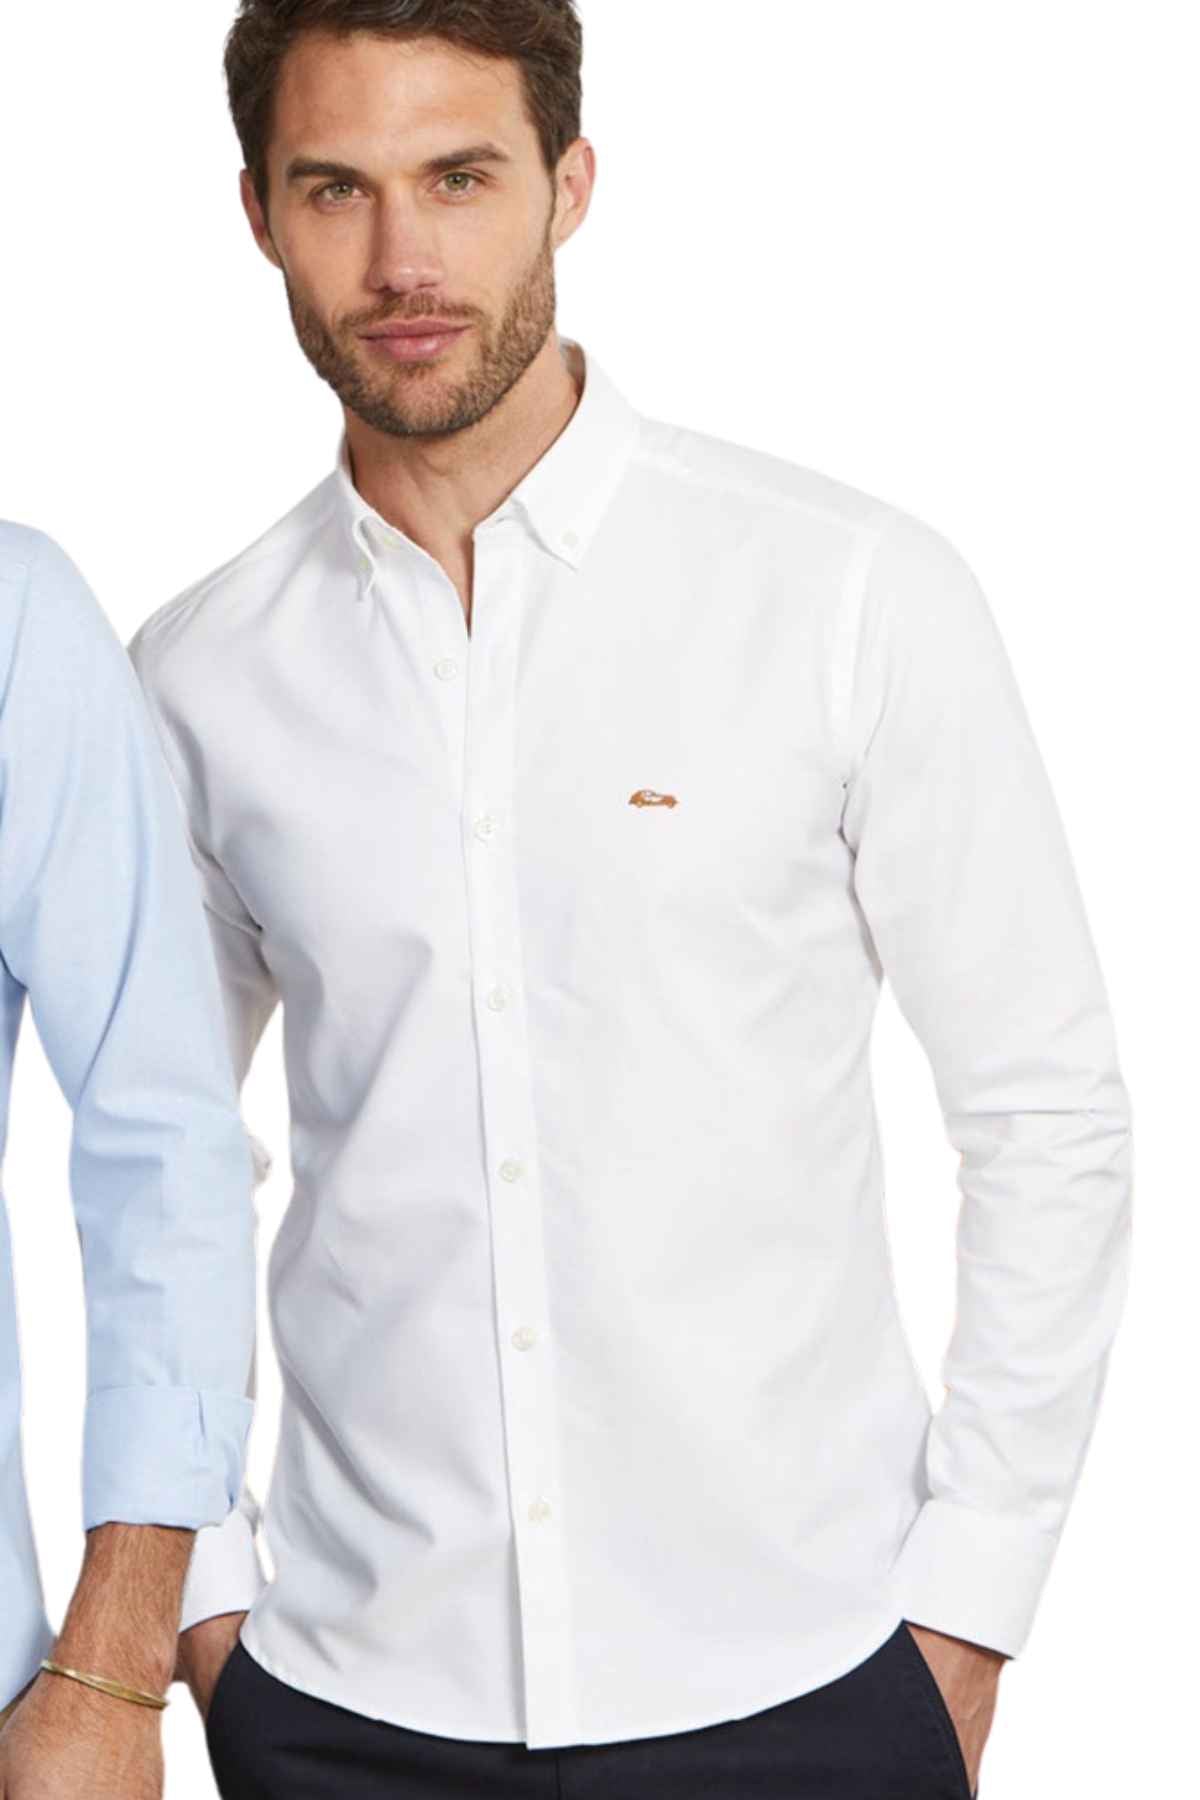 Zamina White Oxford Long Sleeve Shirt